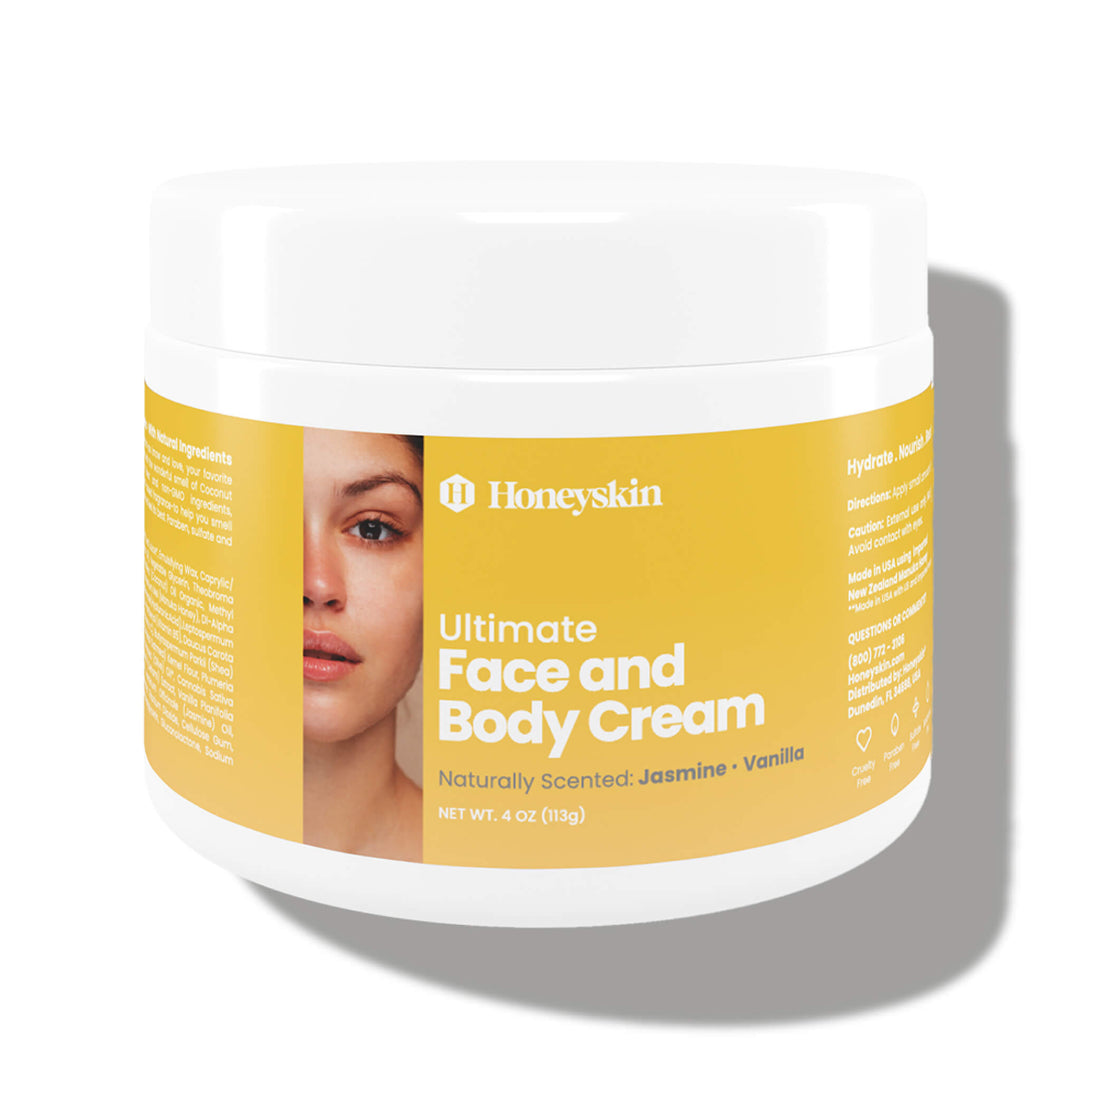 Ultimate Face and Body Cream - Jasmine Vanilla - Honeyskin